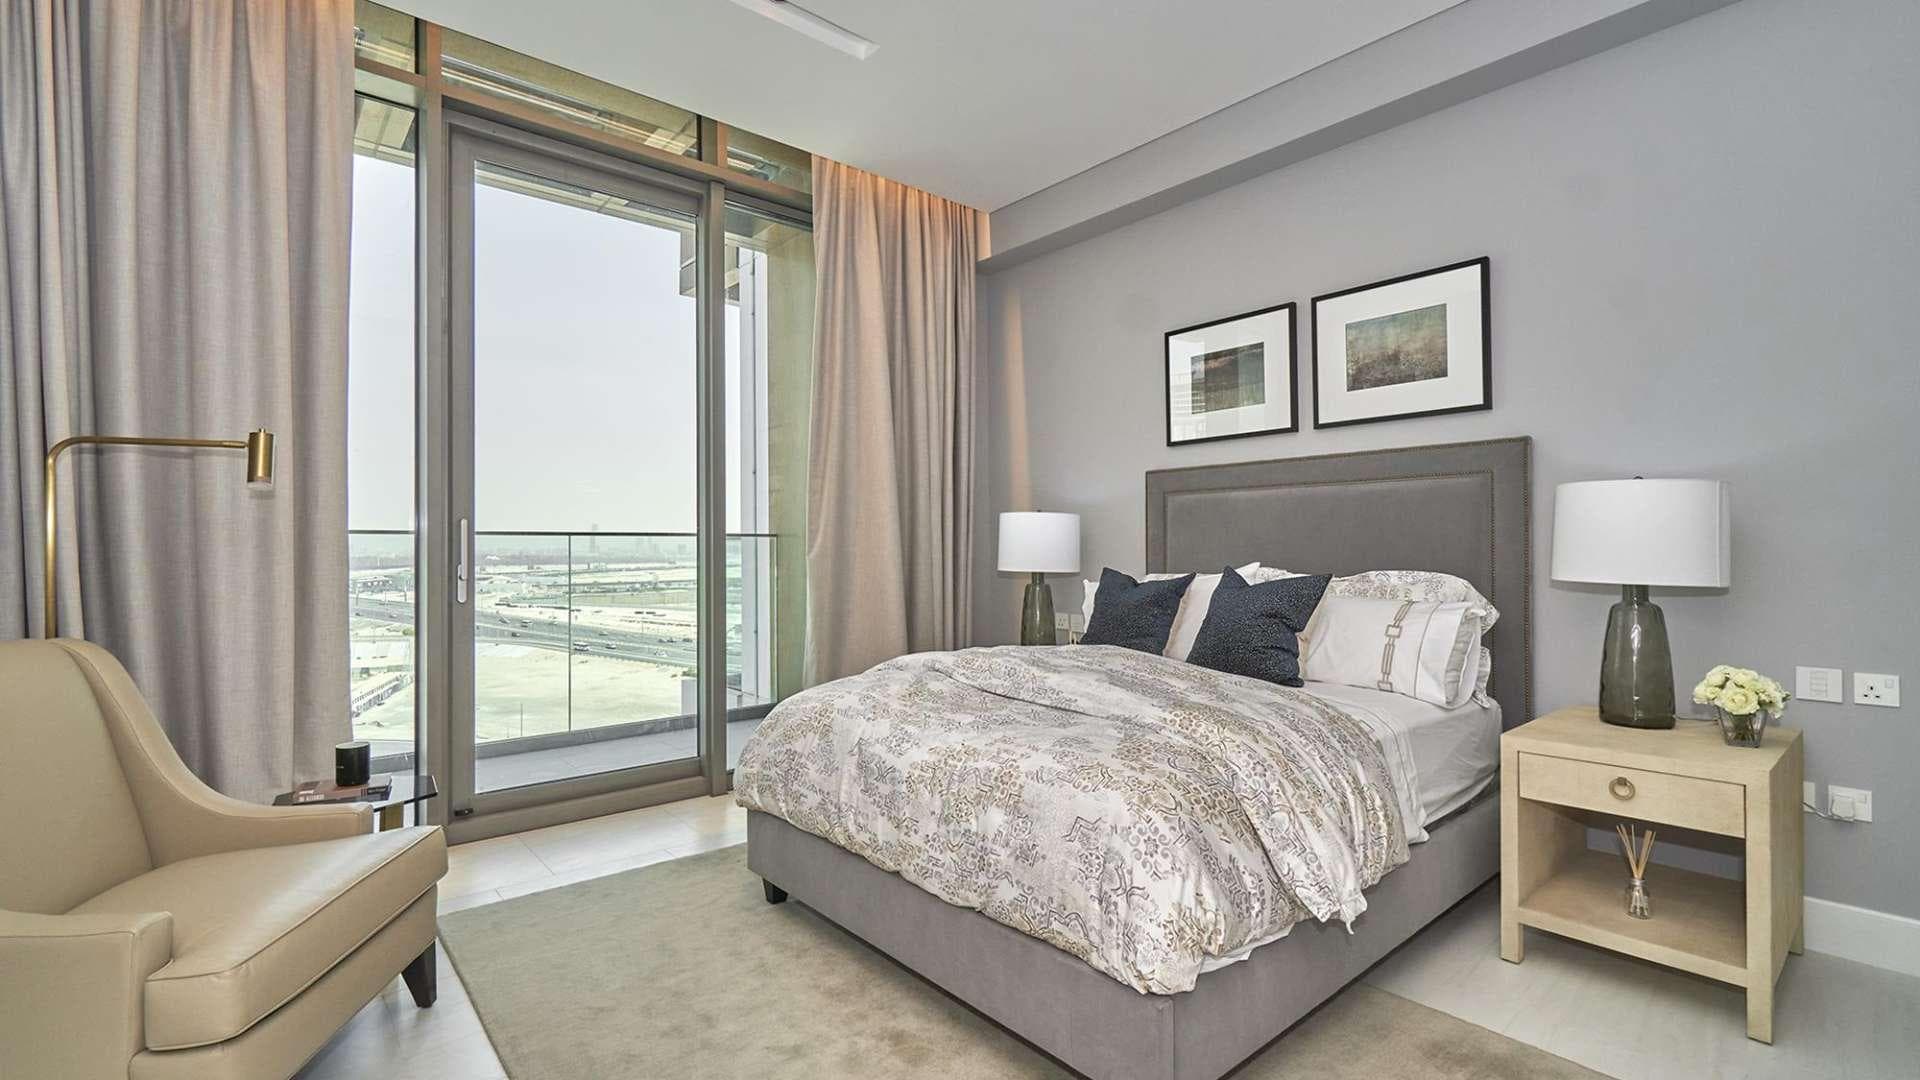 2 Bedroom Apartment For Rent Sls Dubai Hotel Residences Lp20720 1431db9d57307100.jpg